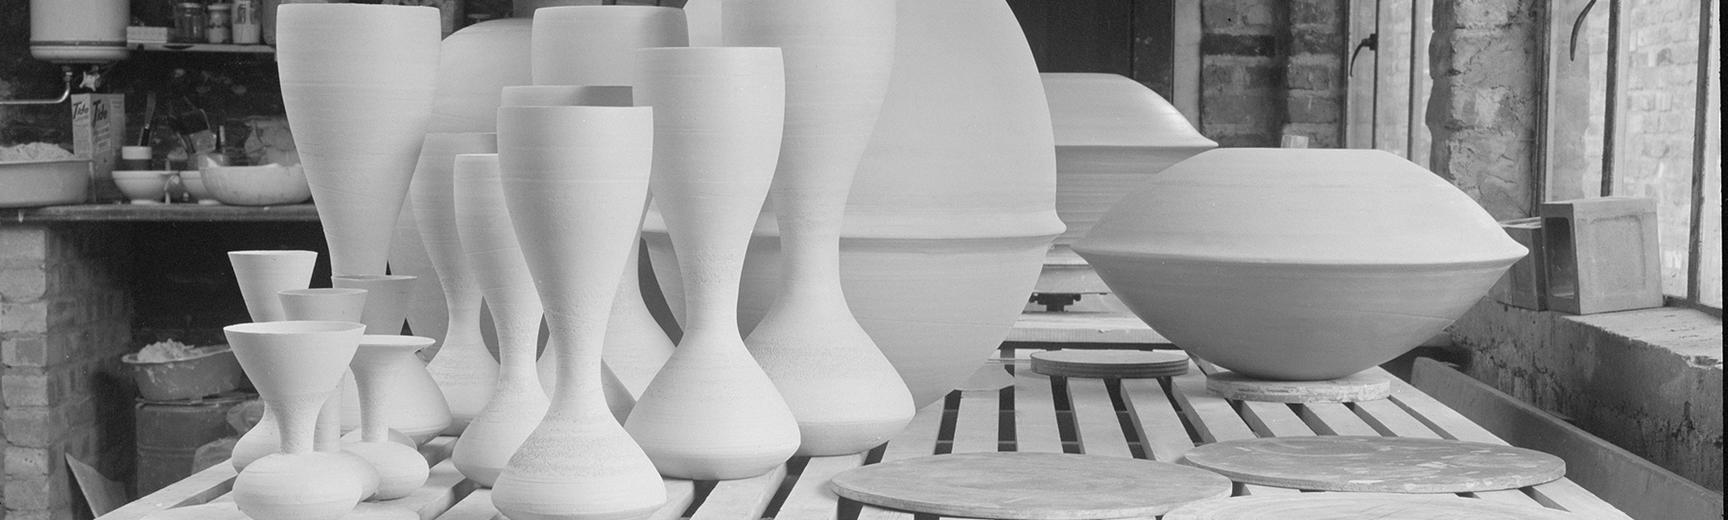 Ceramic vessels by Hans Coper © Jane Coper and Estate of the Artist